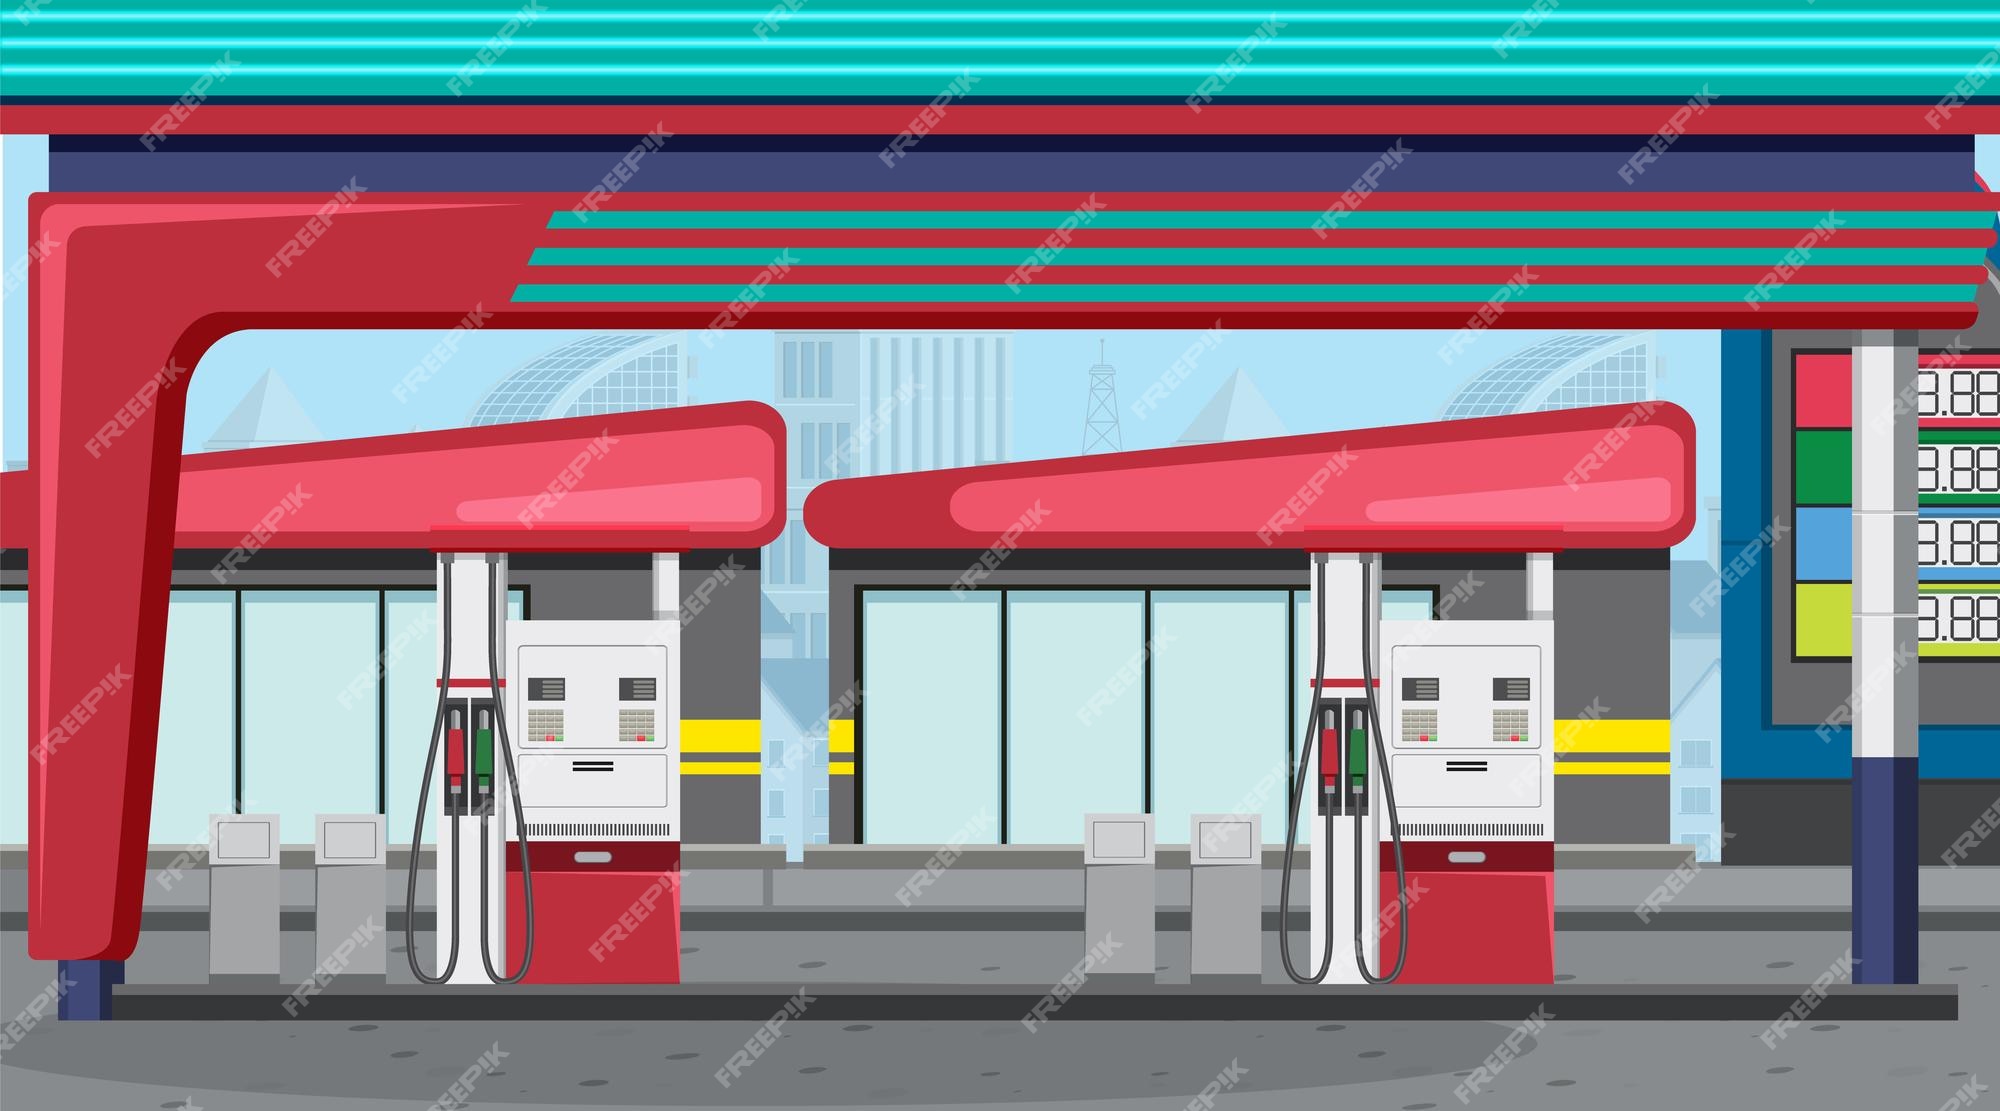 Premium Vector | Gas station cartoon scene